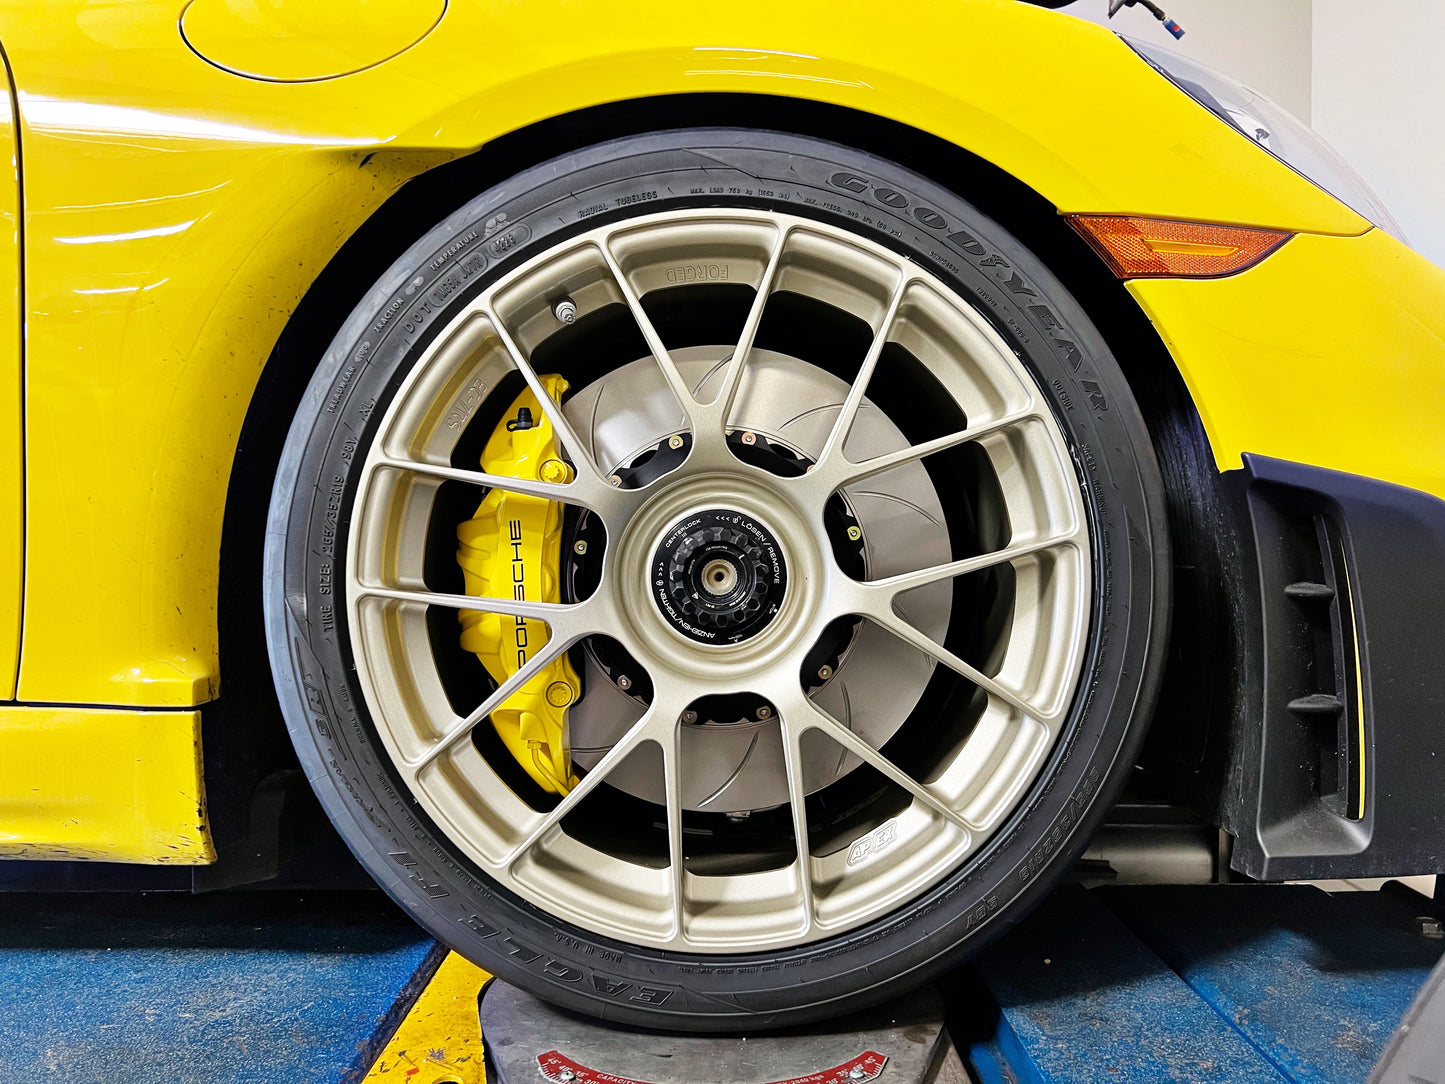 Porsche 718 GT4RS 19" Wheels Upgrade Package